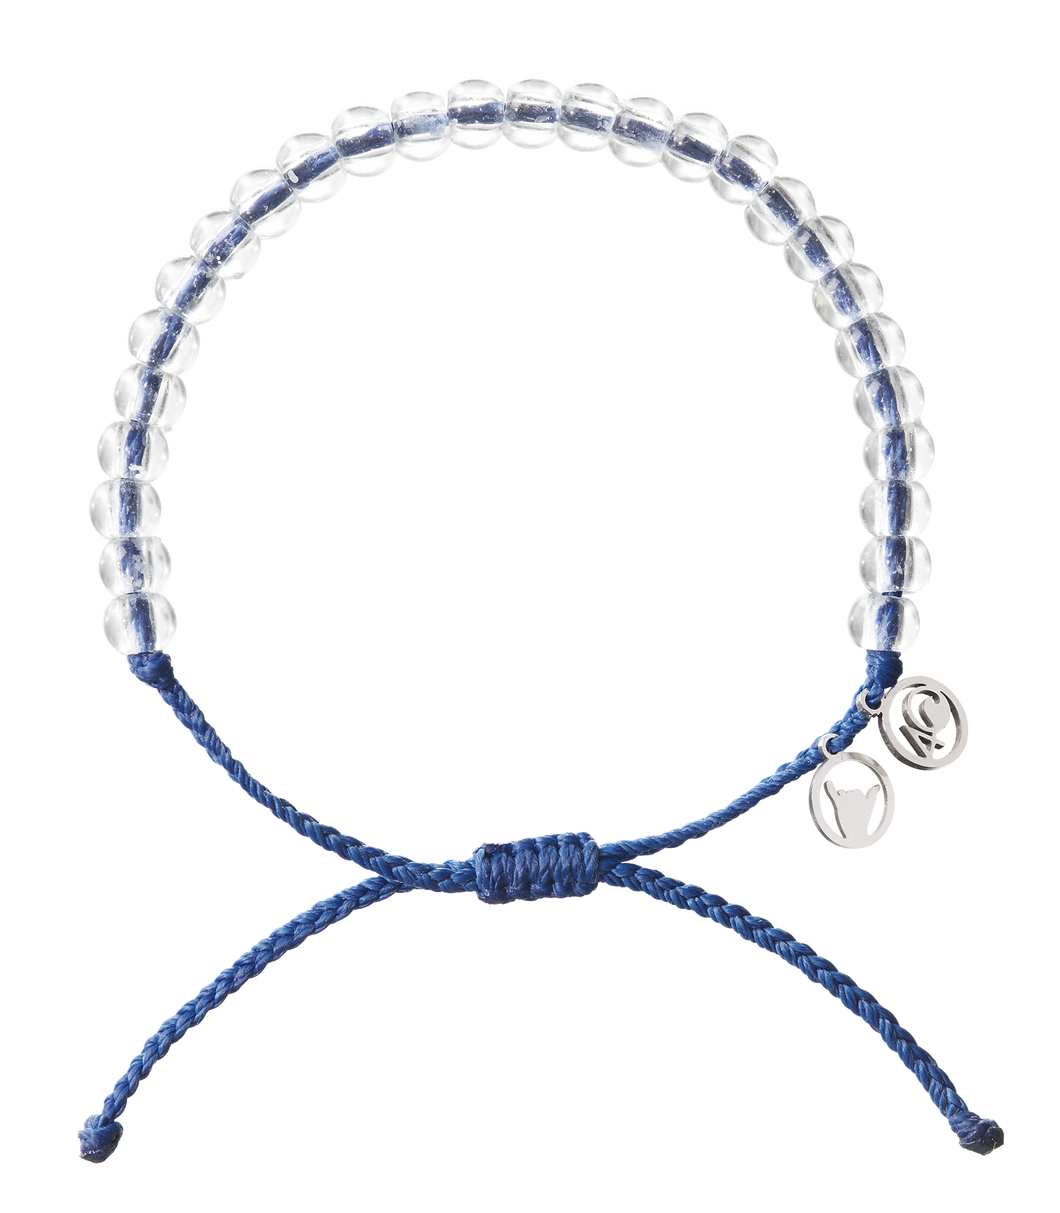 4ocean Signature Beaded Bracelet - Blue - Wholesale [6-pack]